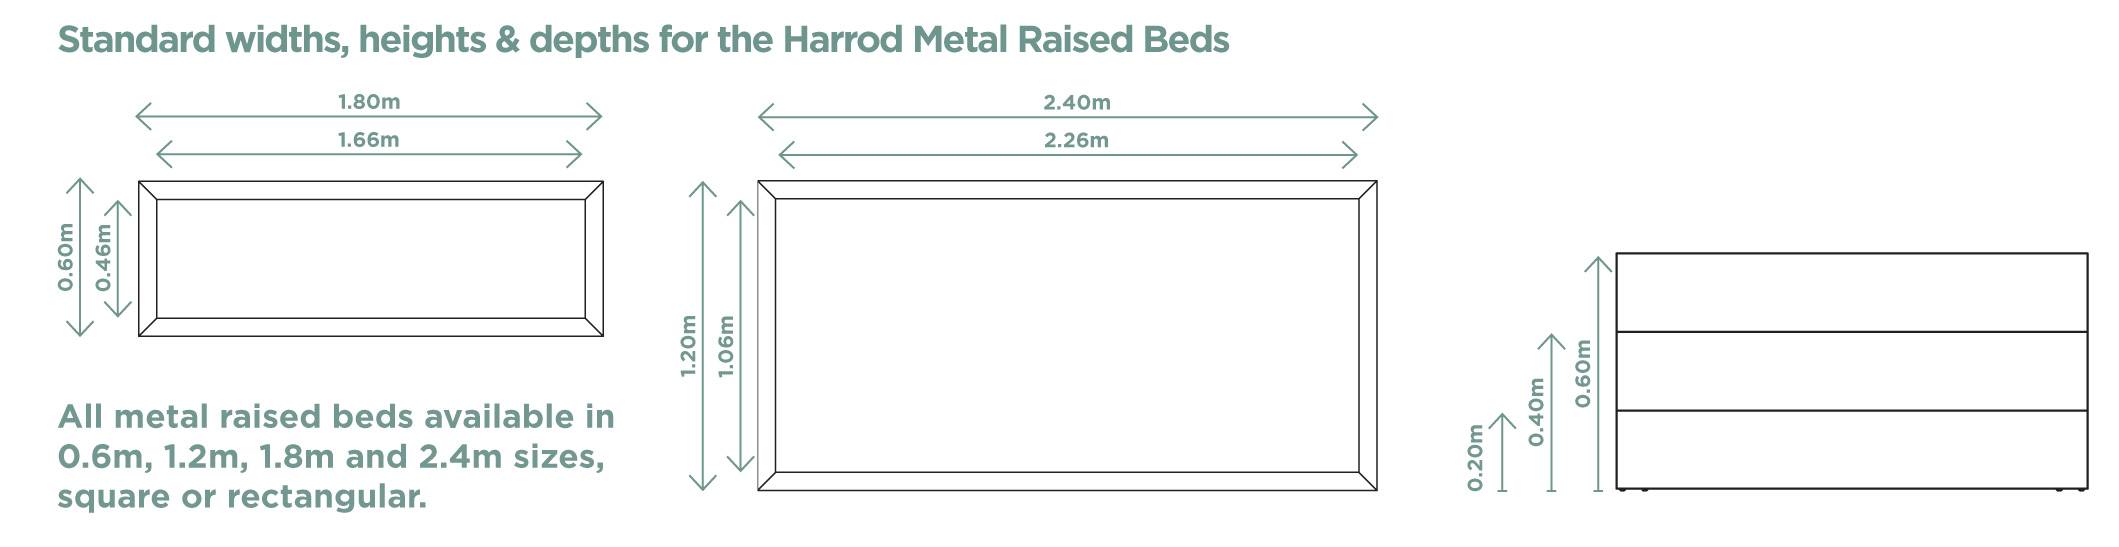 Metal Raised Beds Layout Image